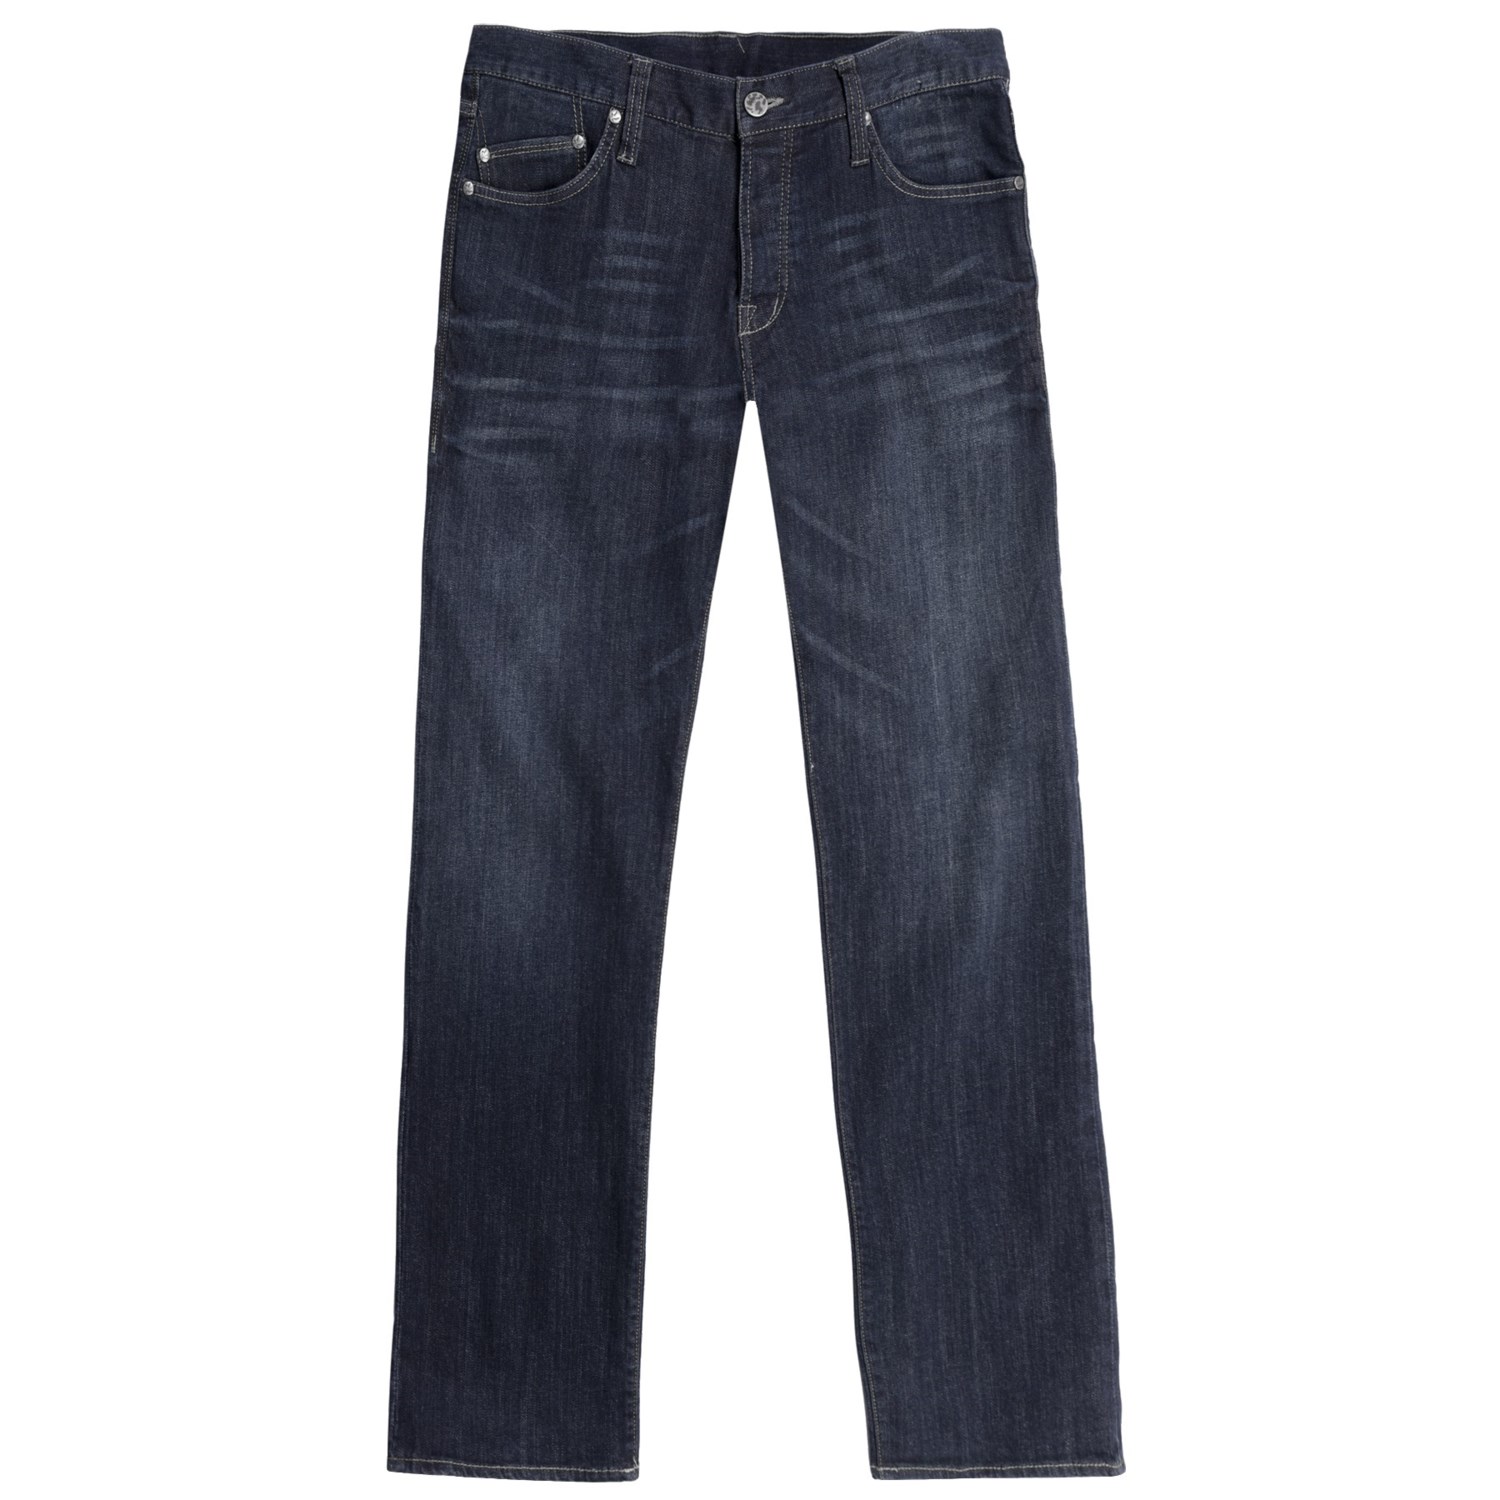 William Rast Isaac Denim Jeans (For Men) 5486W - Save 85%